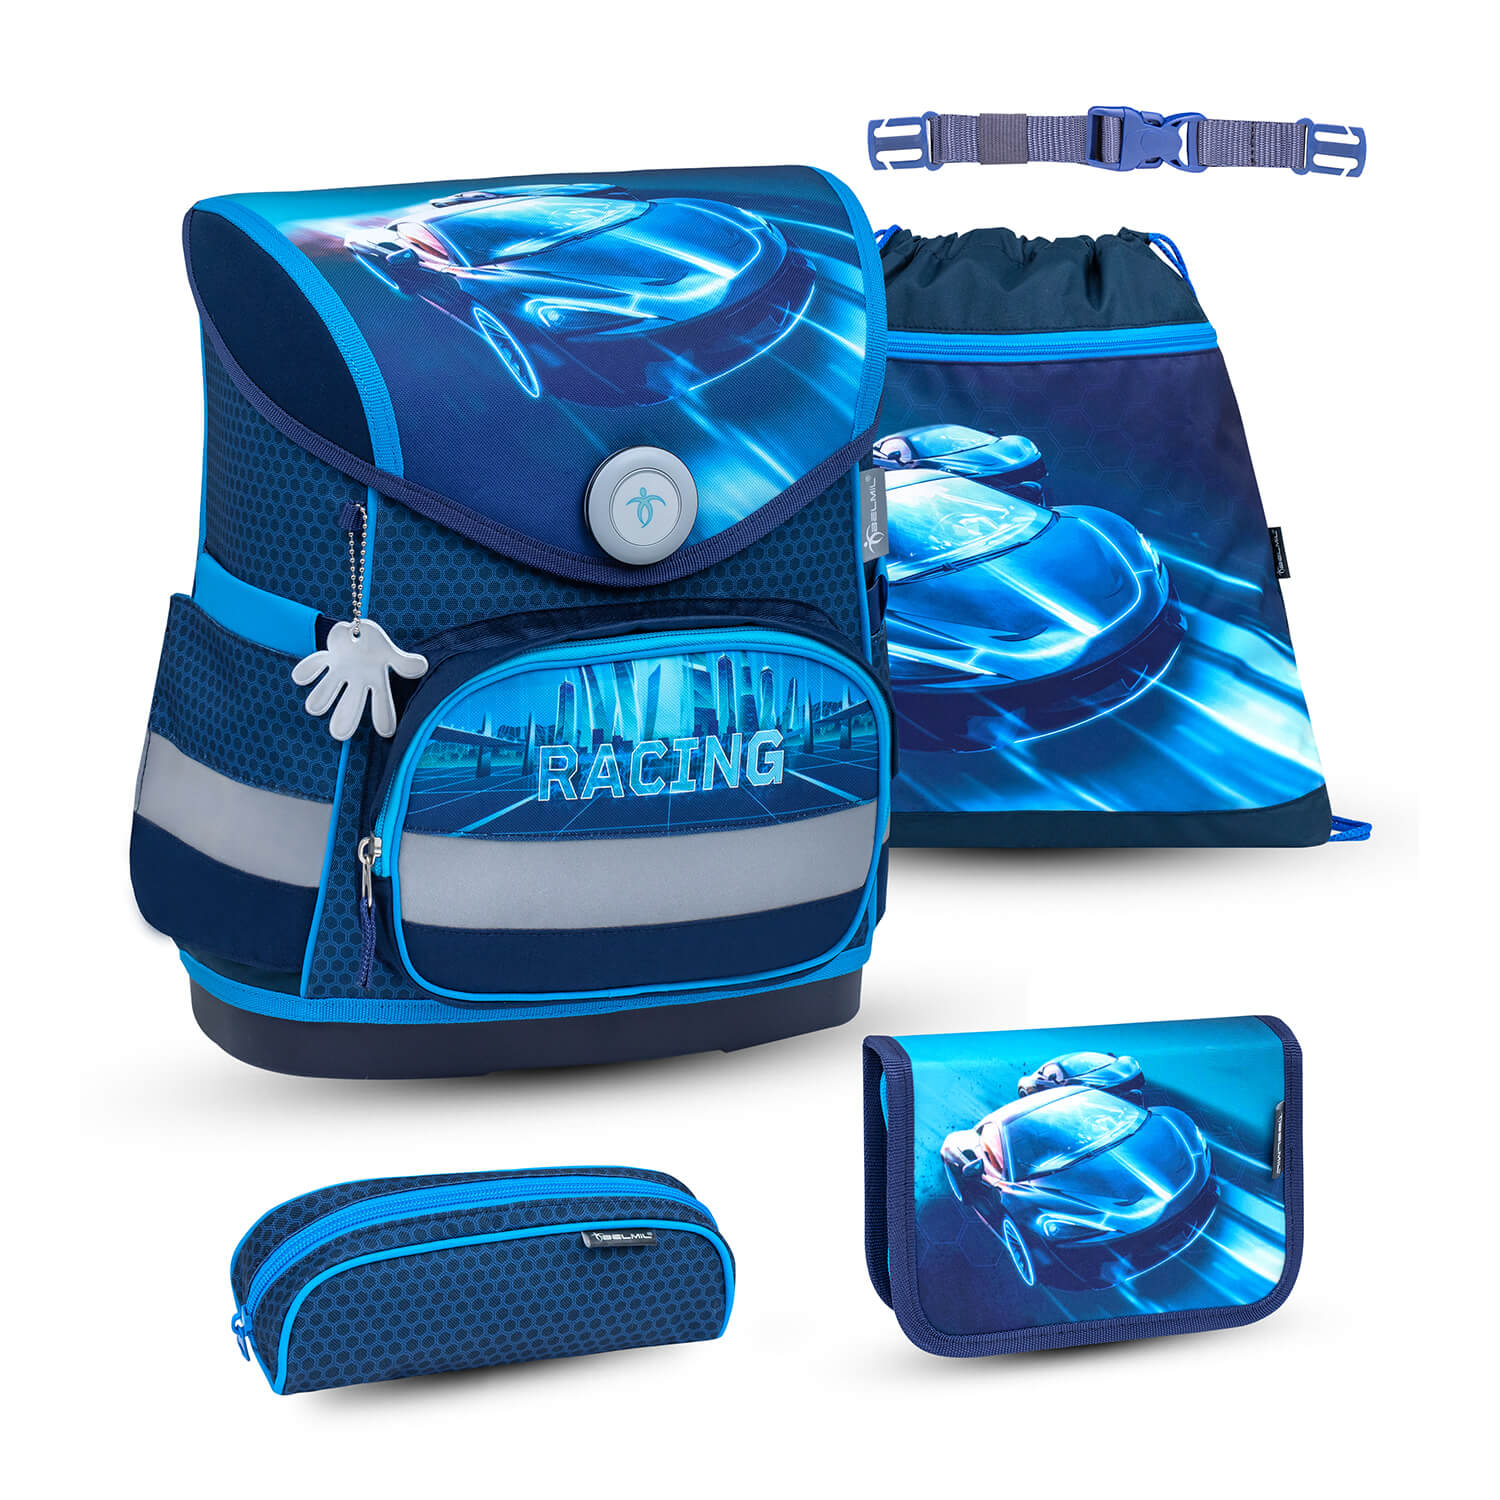 Compact Racing Blue Neon schoolbag set 5 pcs with GRATIS chest strap